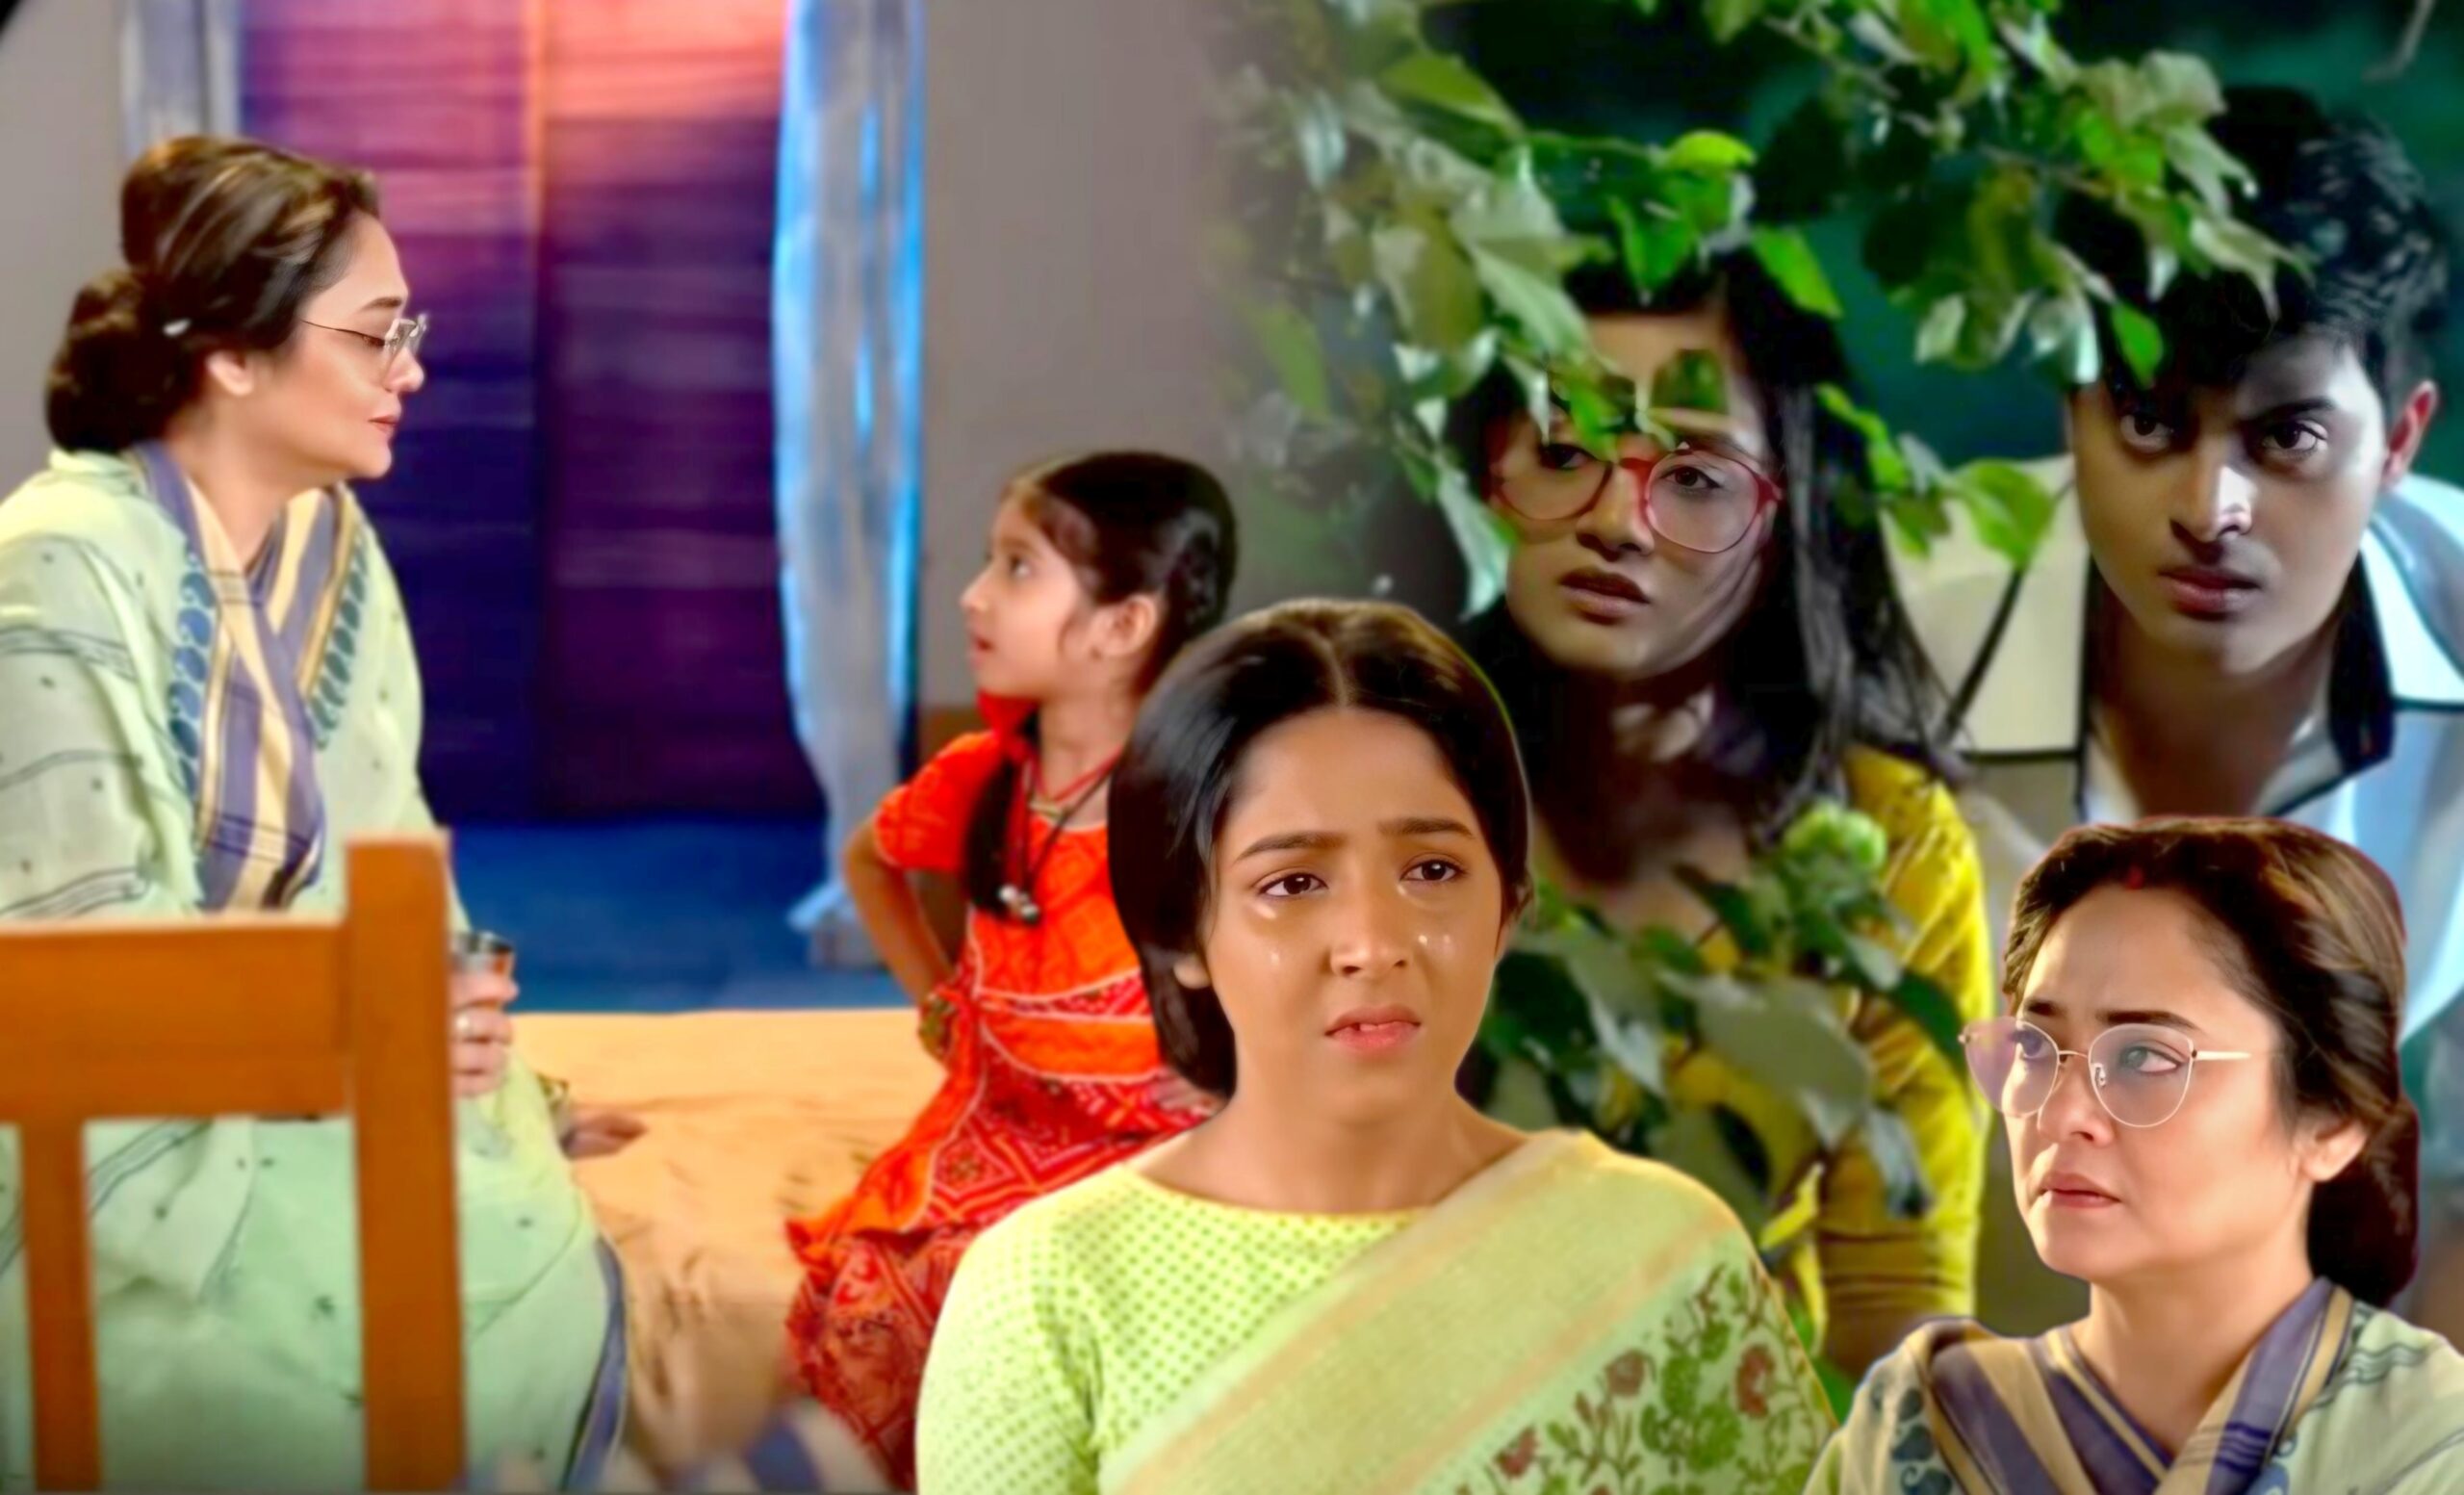 Anurager Chhowa, Star Jalsha, Bengali Serial, অনুরাগের ছোঁয়া, স্টার জলসা, বাংলা সিরিয়াল